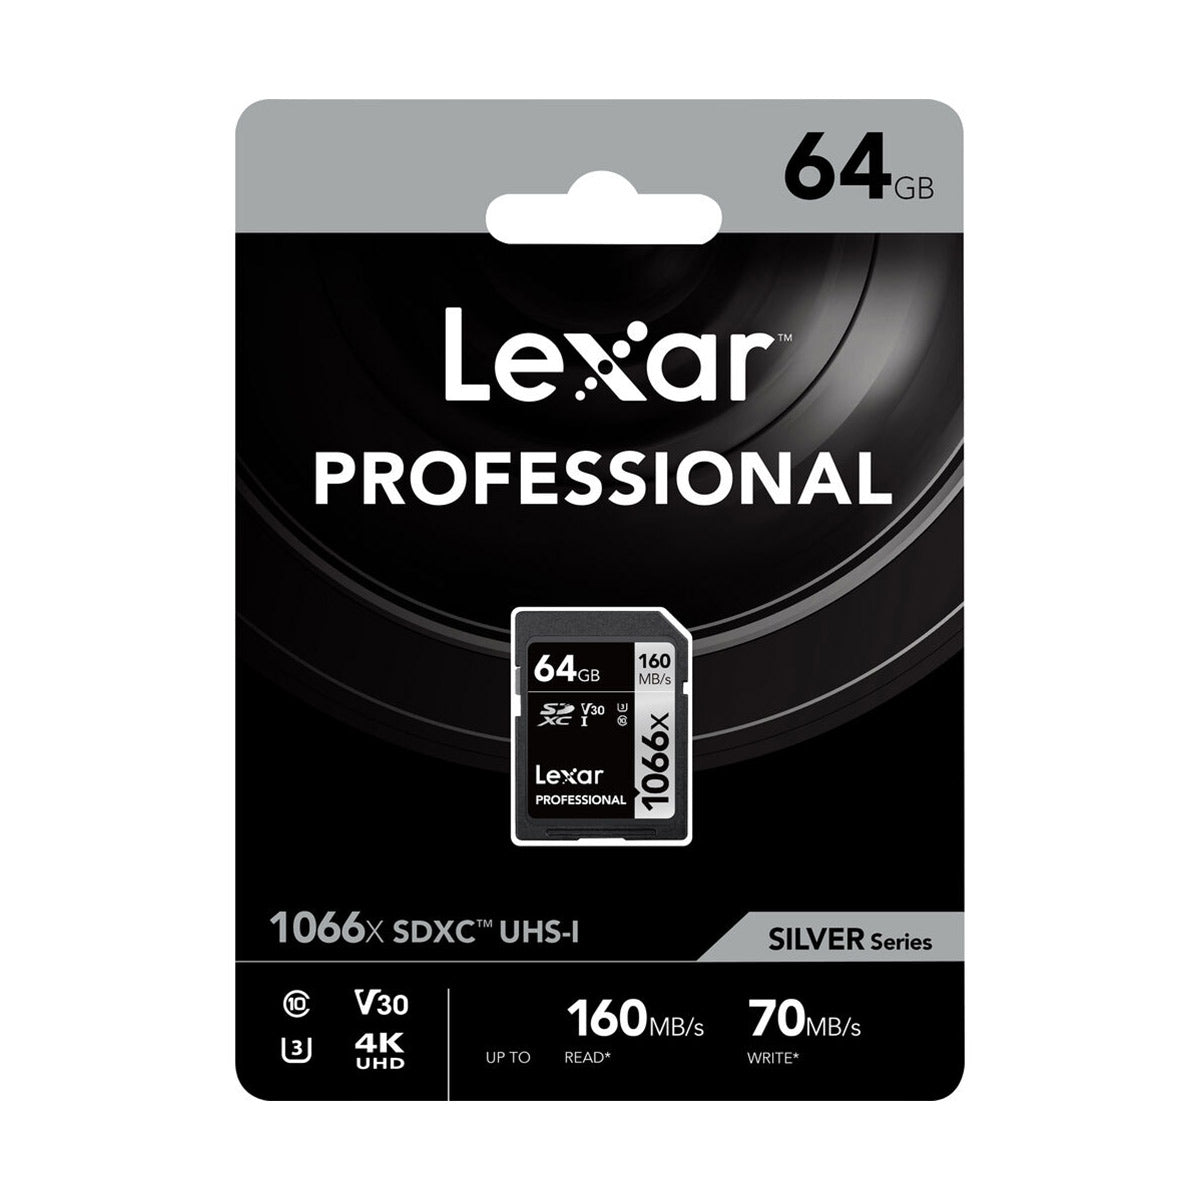 Lexar 64GB Professional 1066x UHS-I SDXC (V30) Memory Card